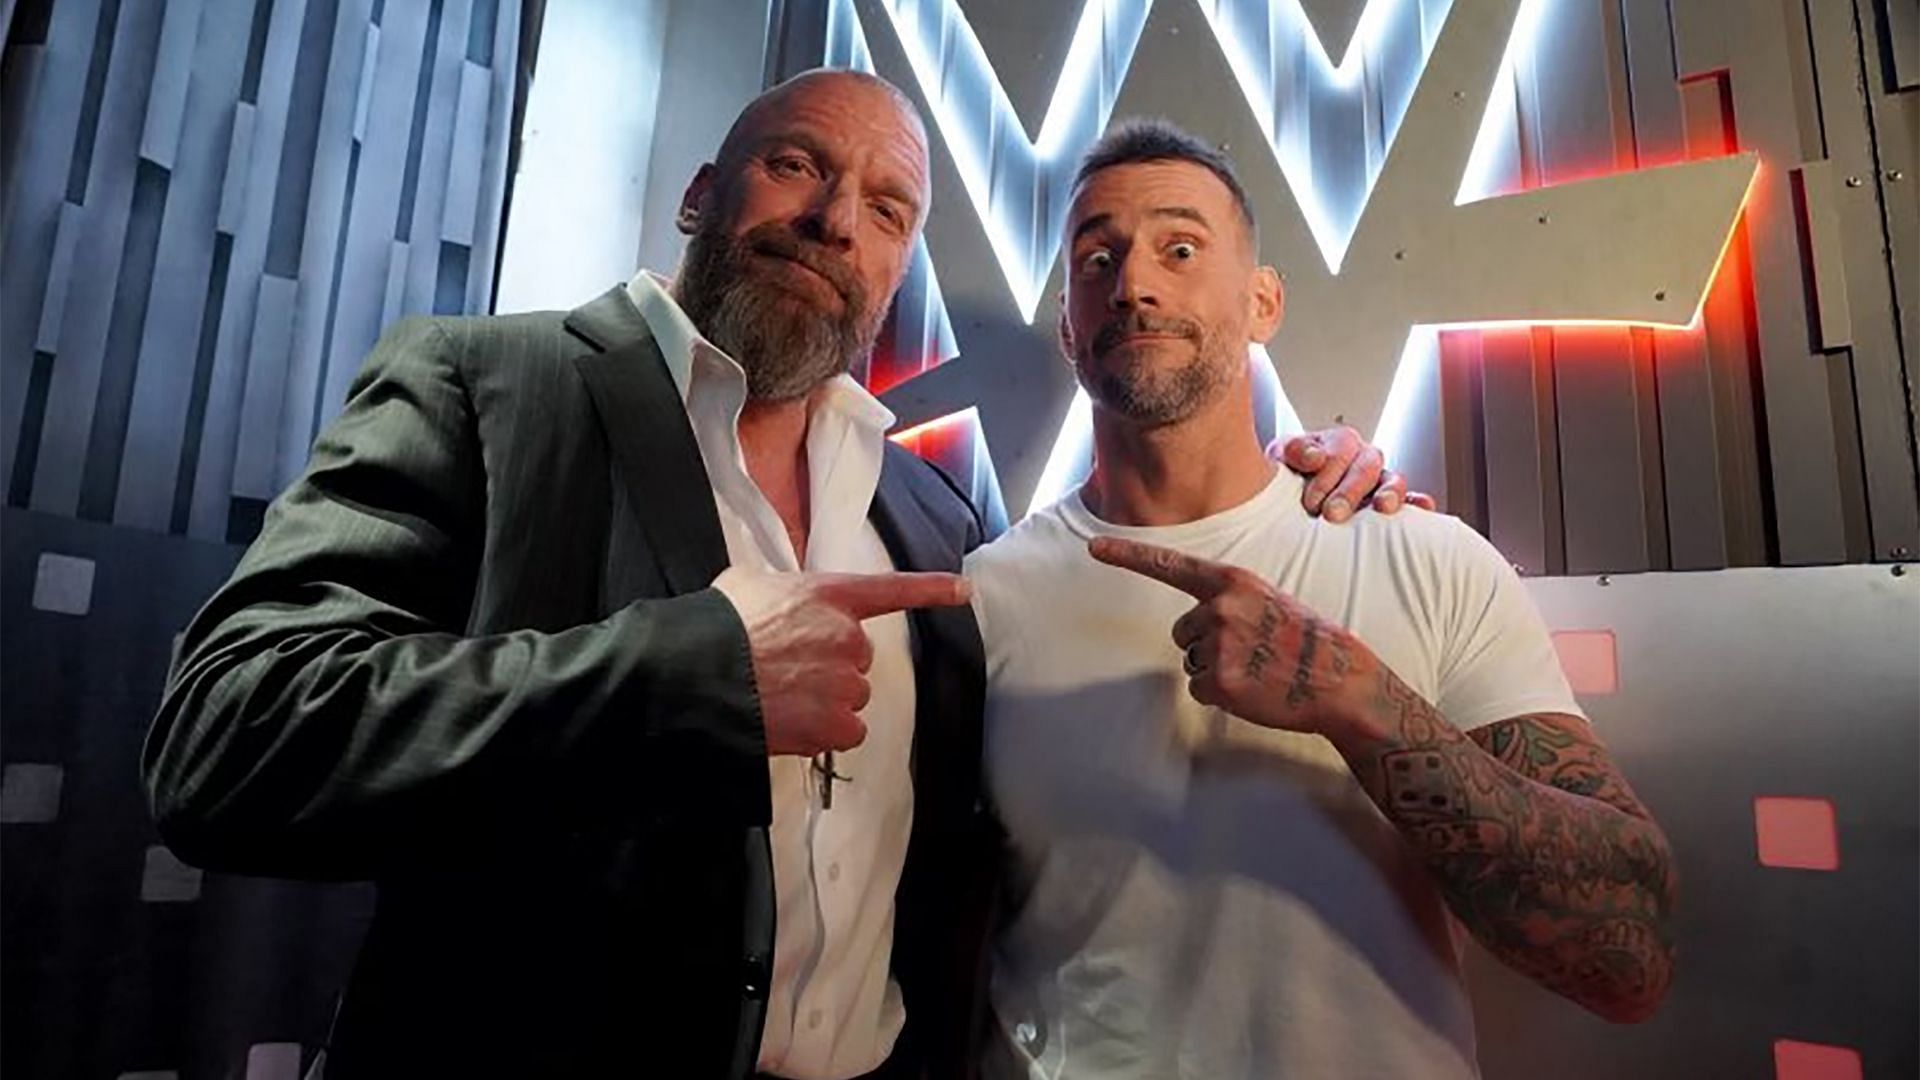 Triple H and CM Punk pose backstage at WWE Survivor Series